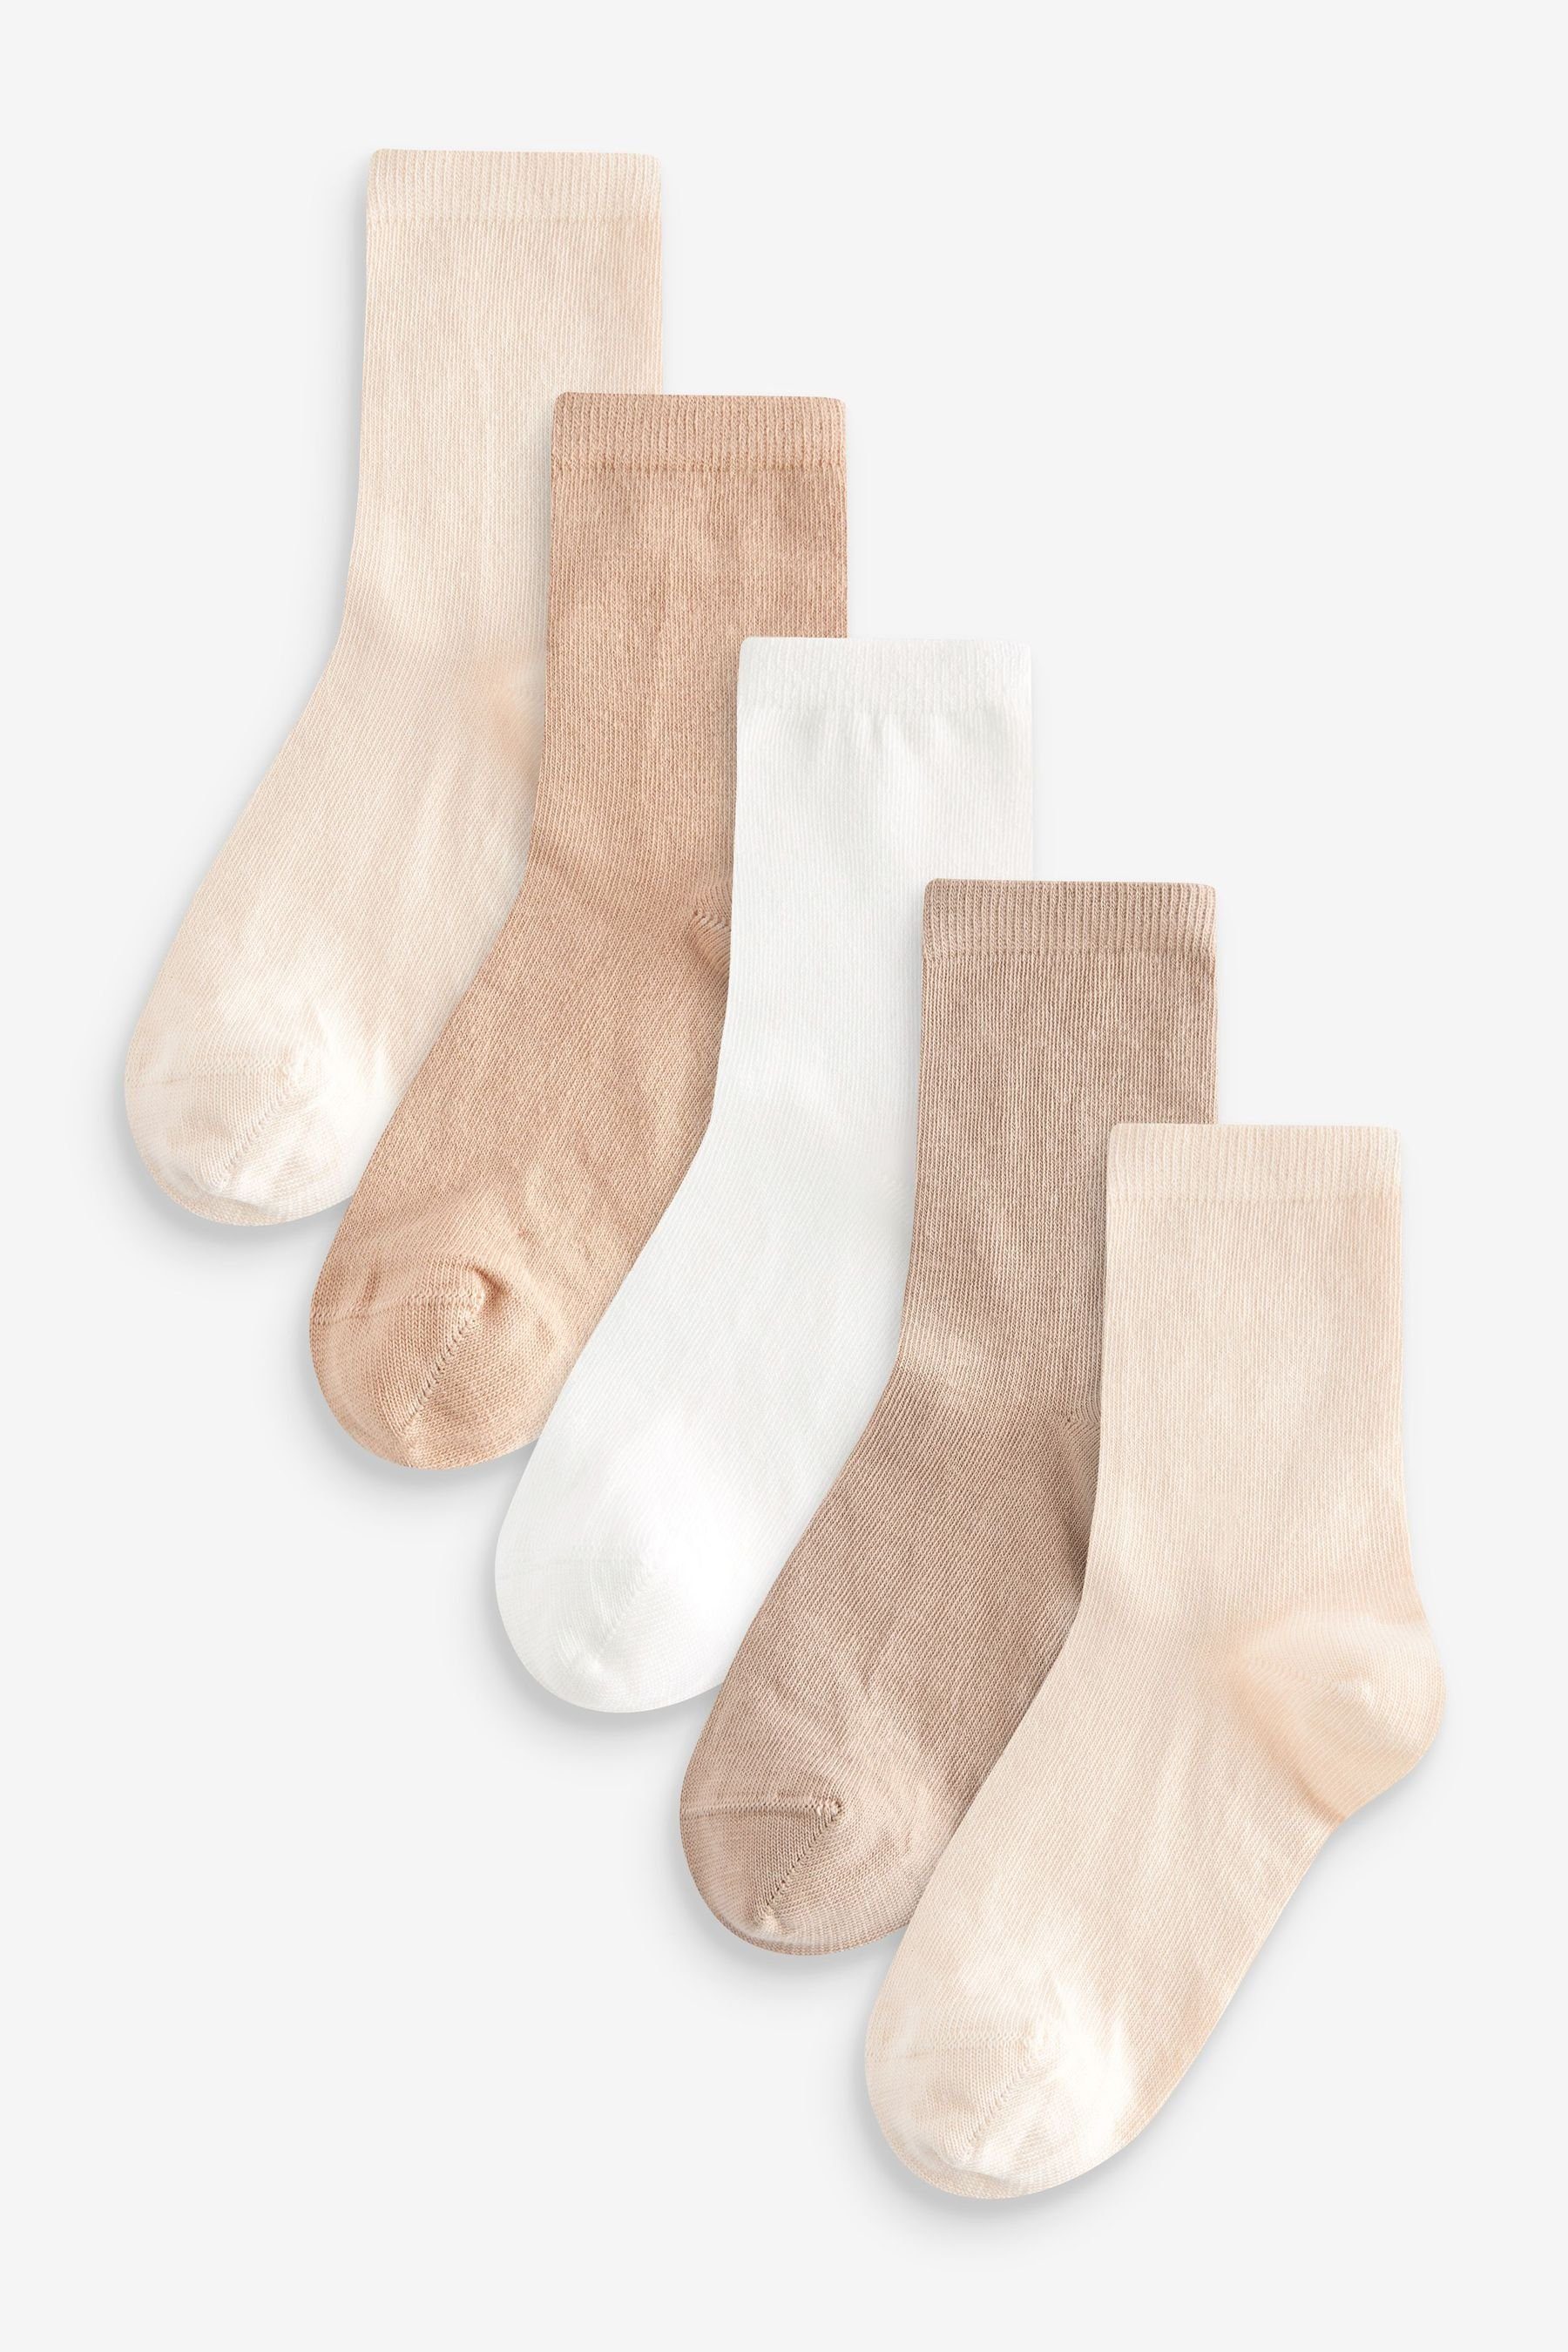 Next Kurzsocken Socken mit hohem Baumwollanteil im 5er-Pack (5-Paar)